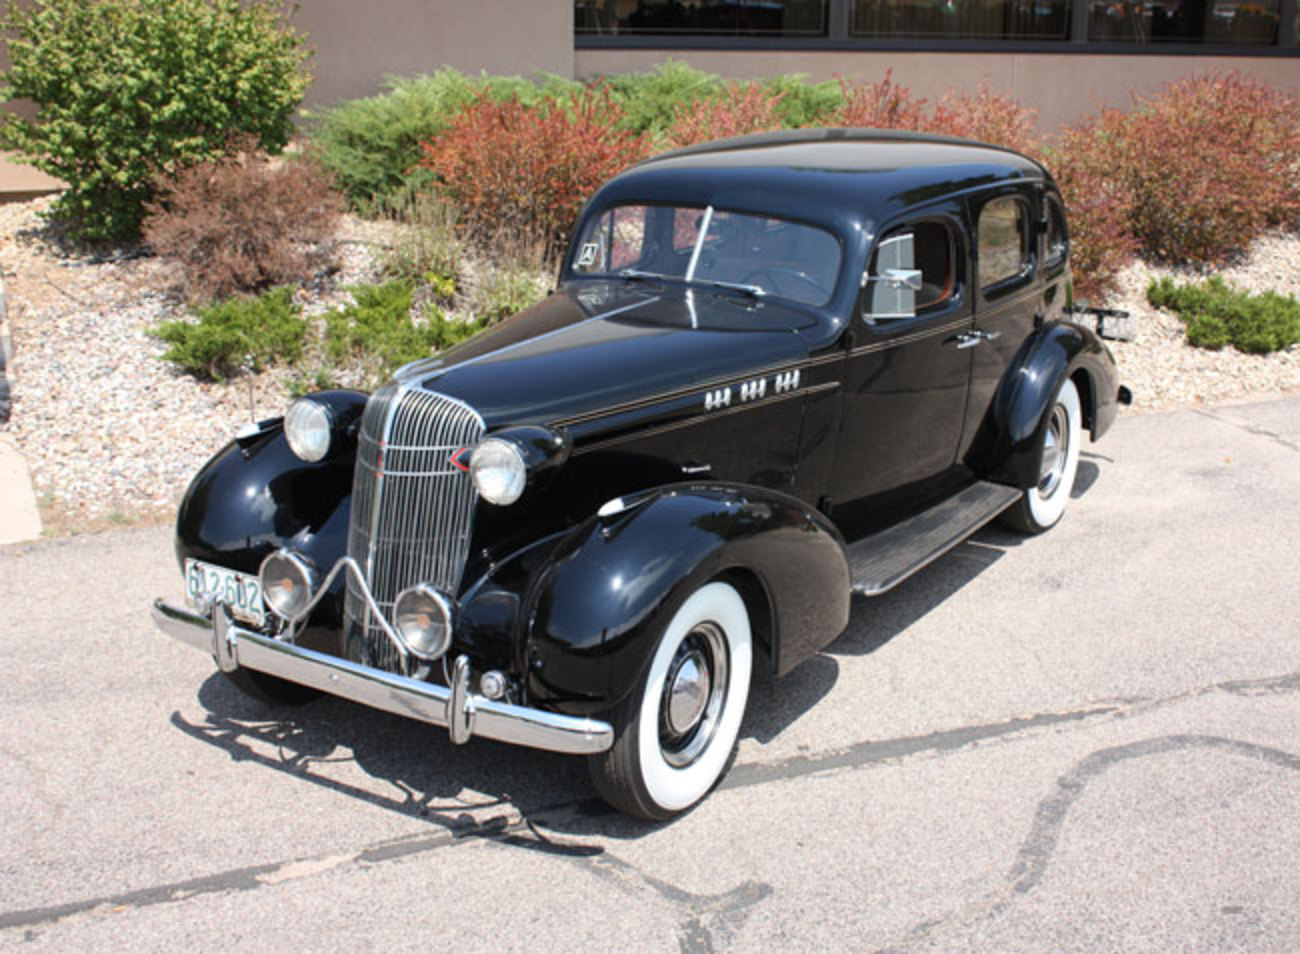 Car of the Week: 1936 Oldsmobile L-36 touring sedan